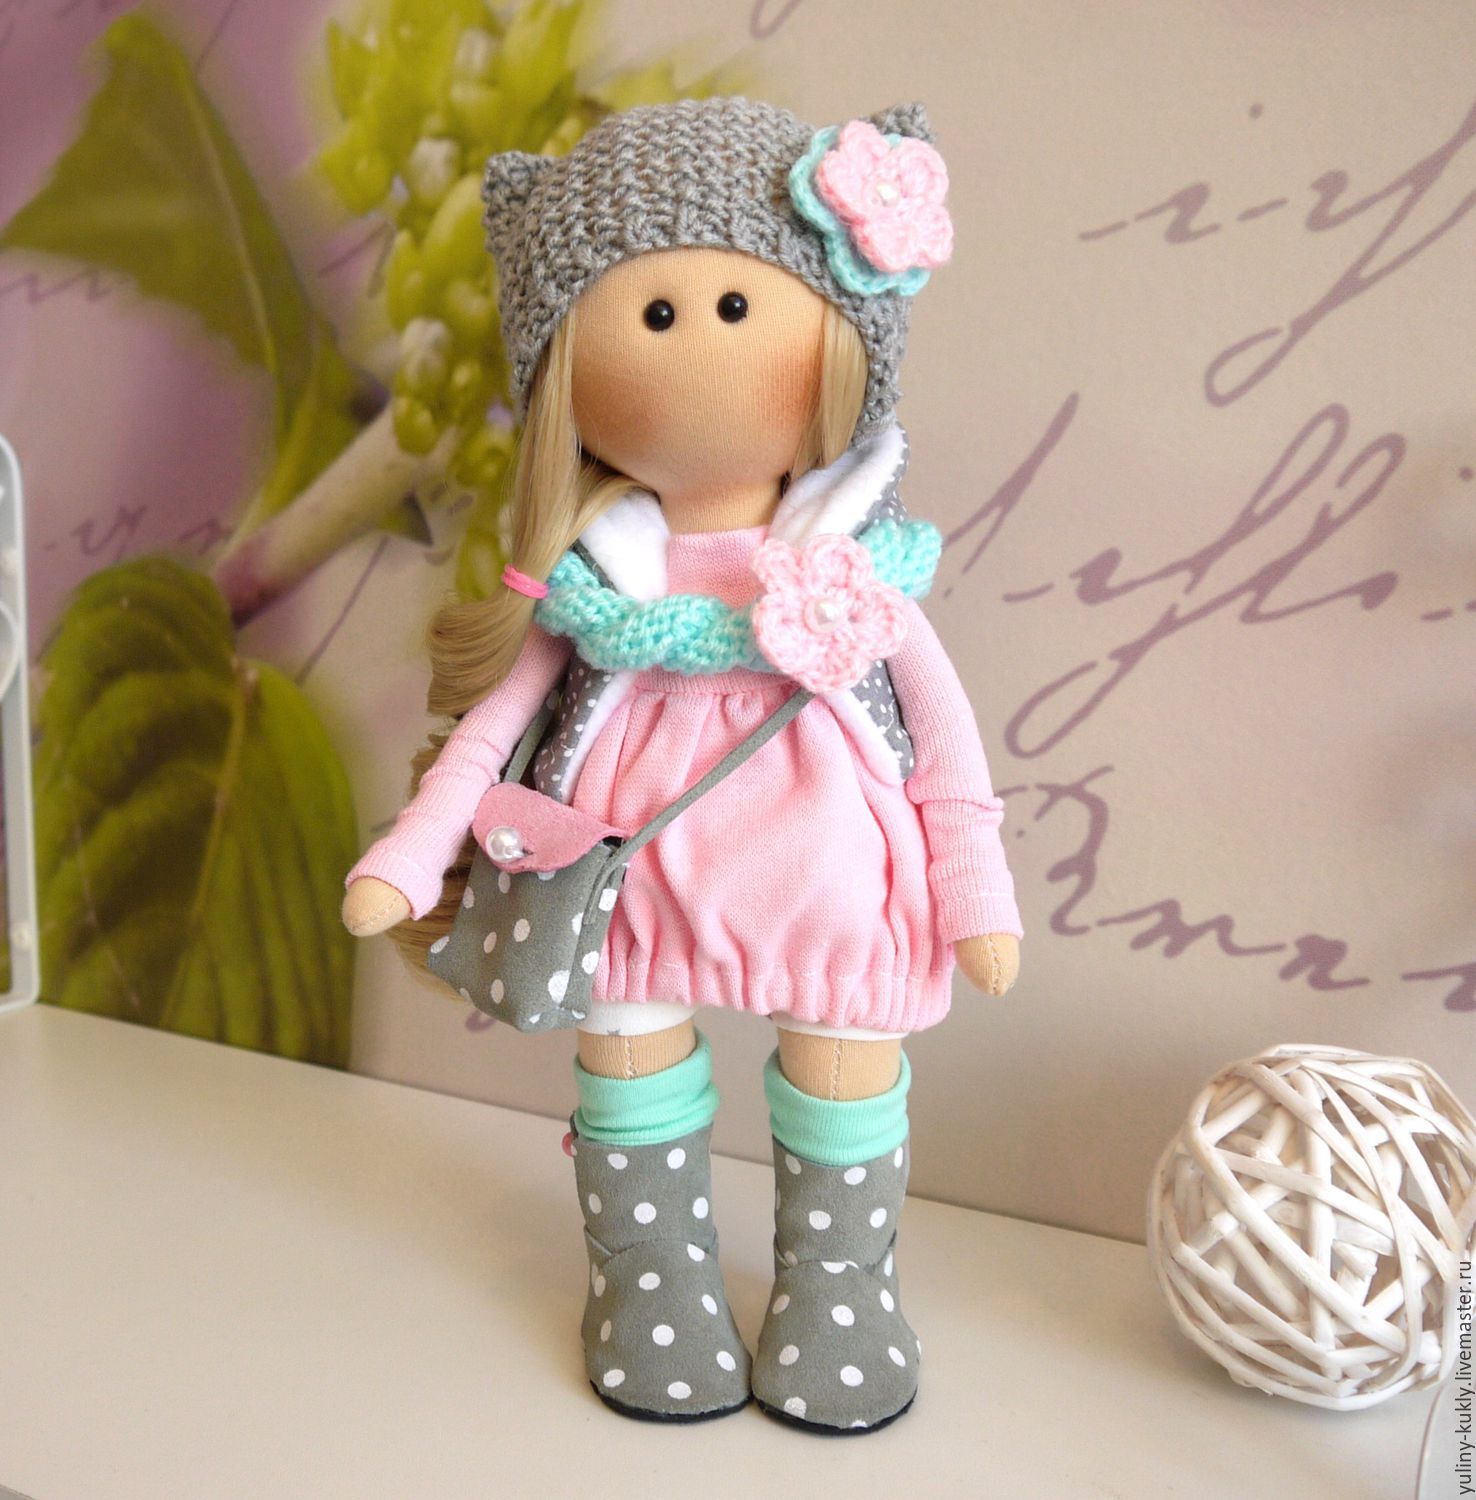 Текстильная кукла мастер класс: Текстильная кукла от макушки до пяточек